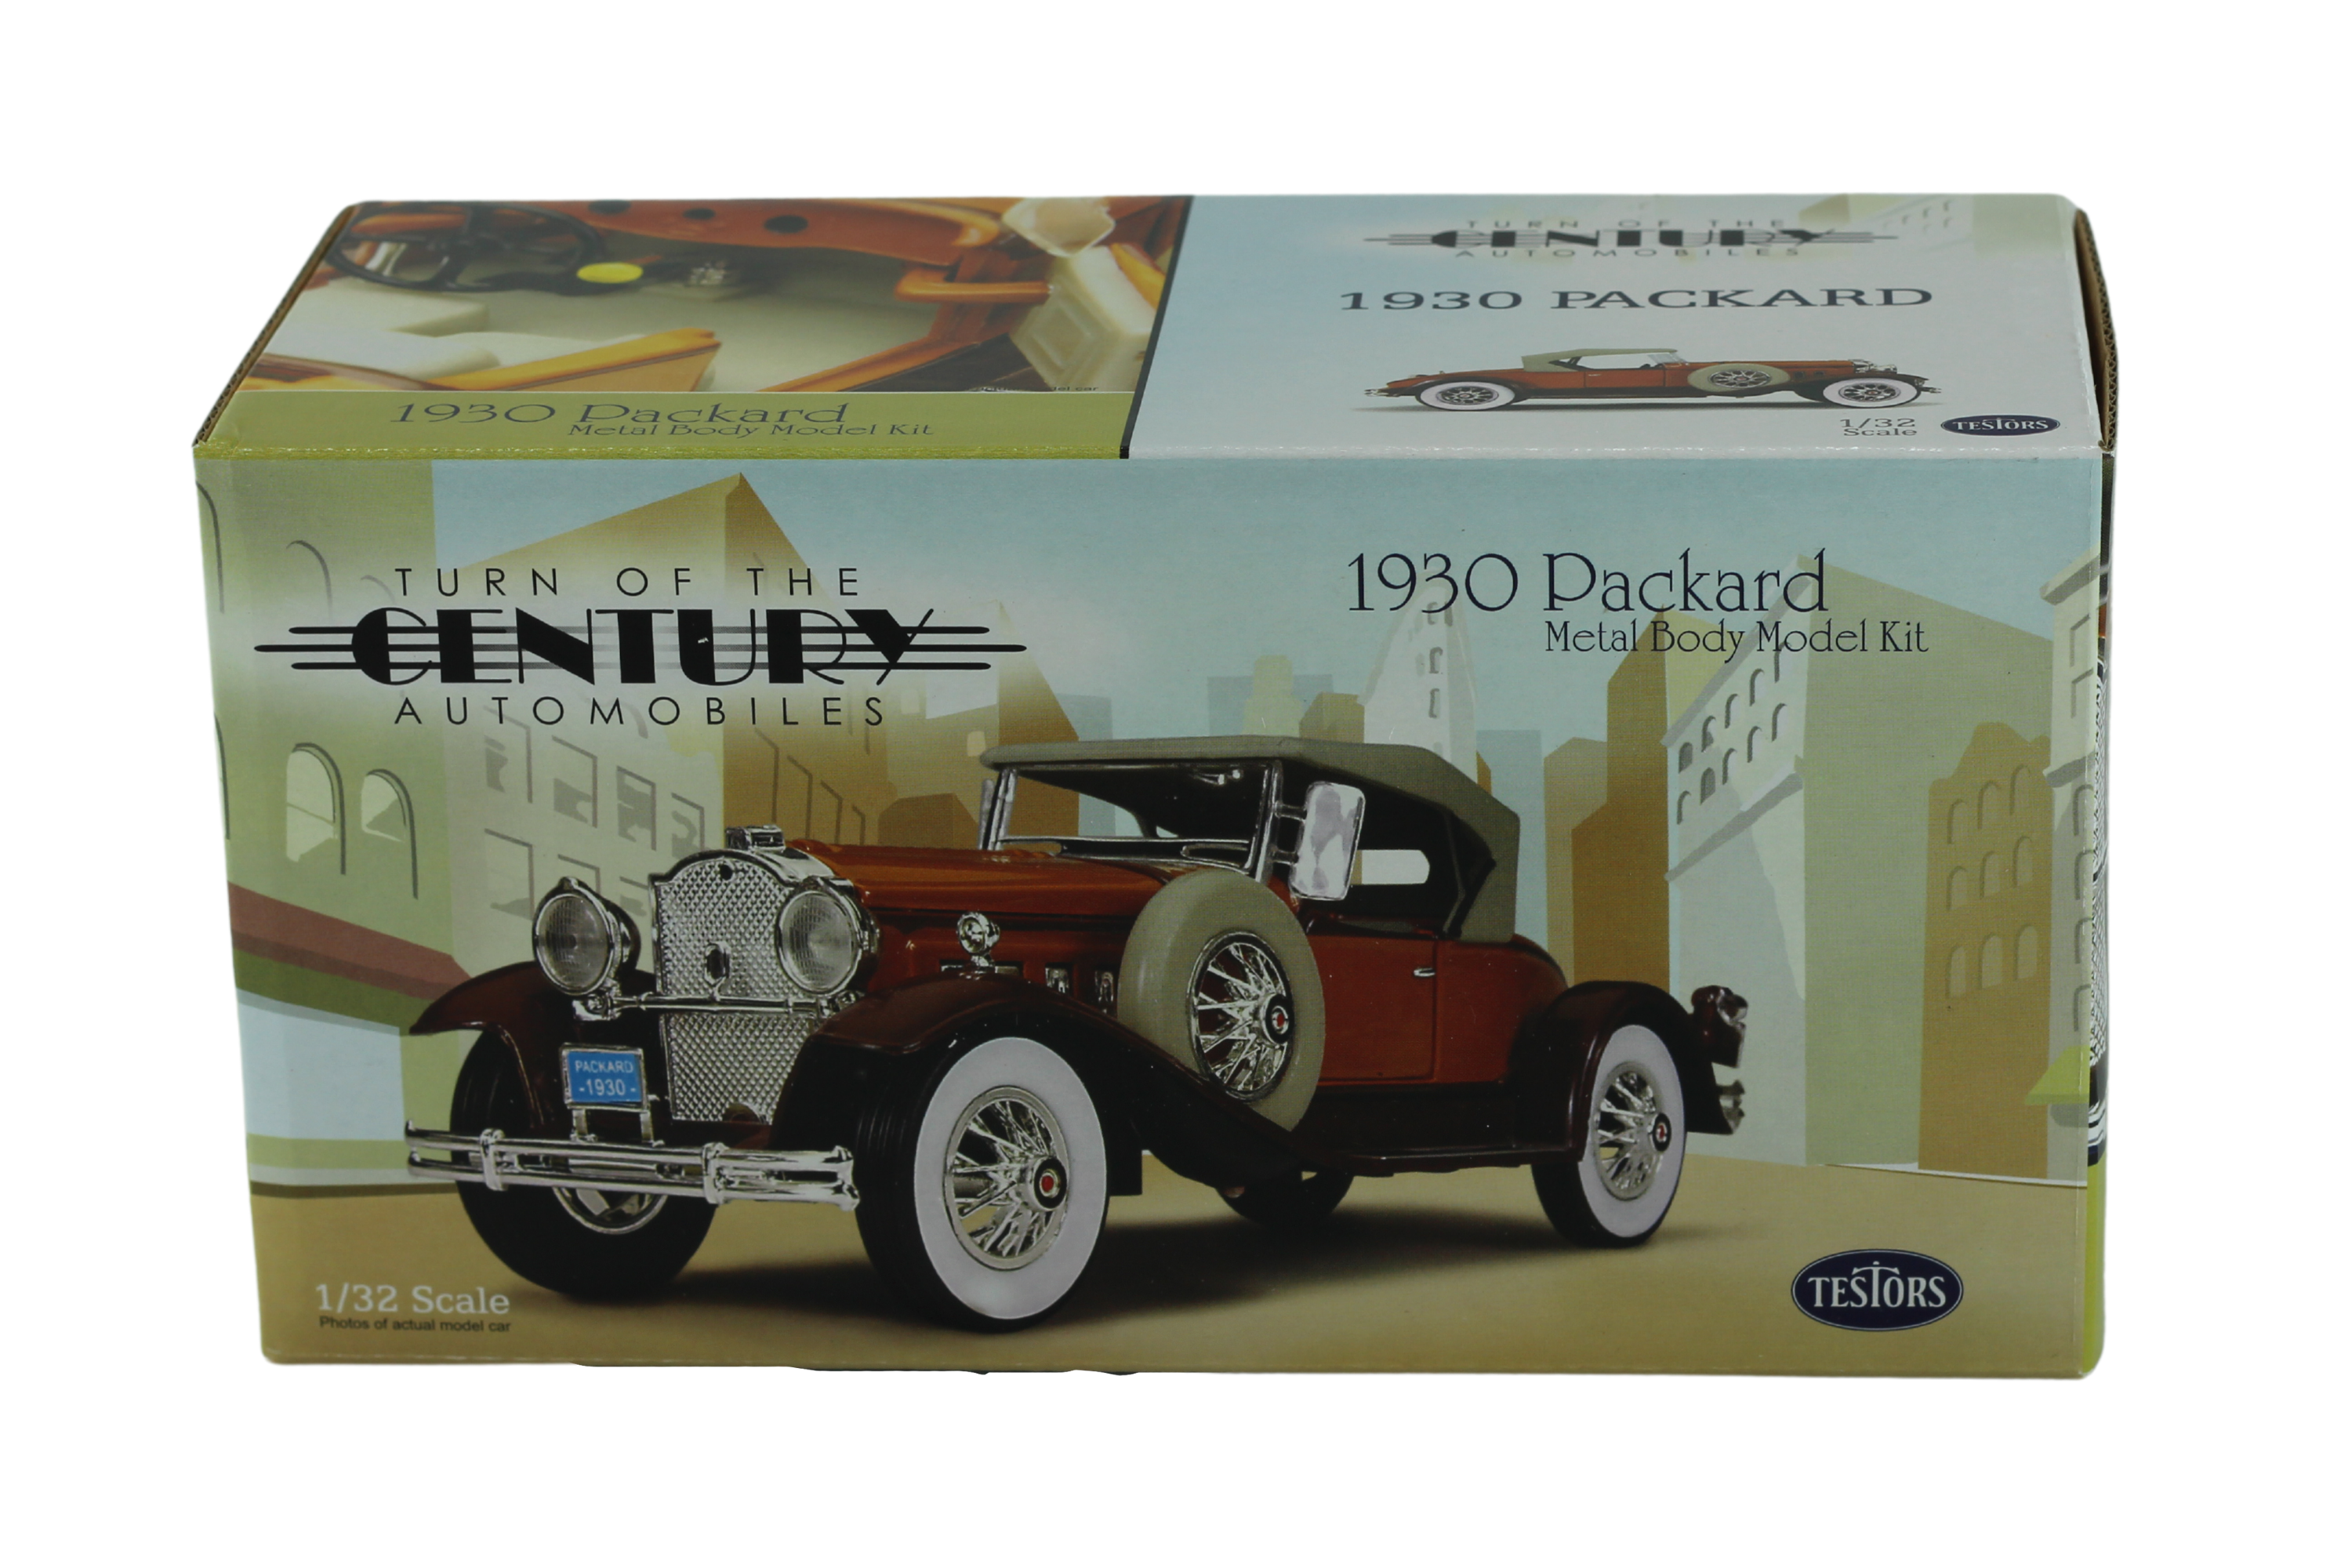 Testors 1:32 Scale Diecast 1930 Packard Metal Body Model Kit - Turn of the Century Automobiles - Toptoys2u